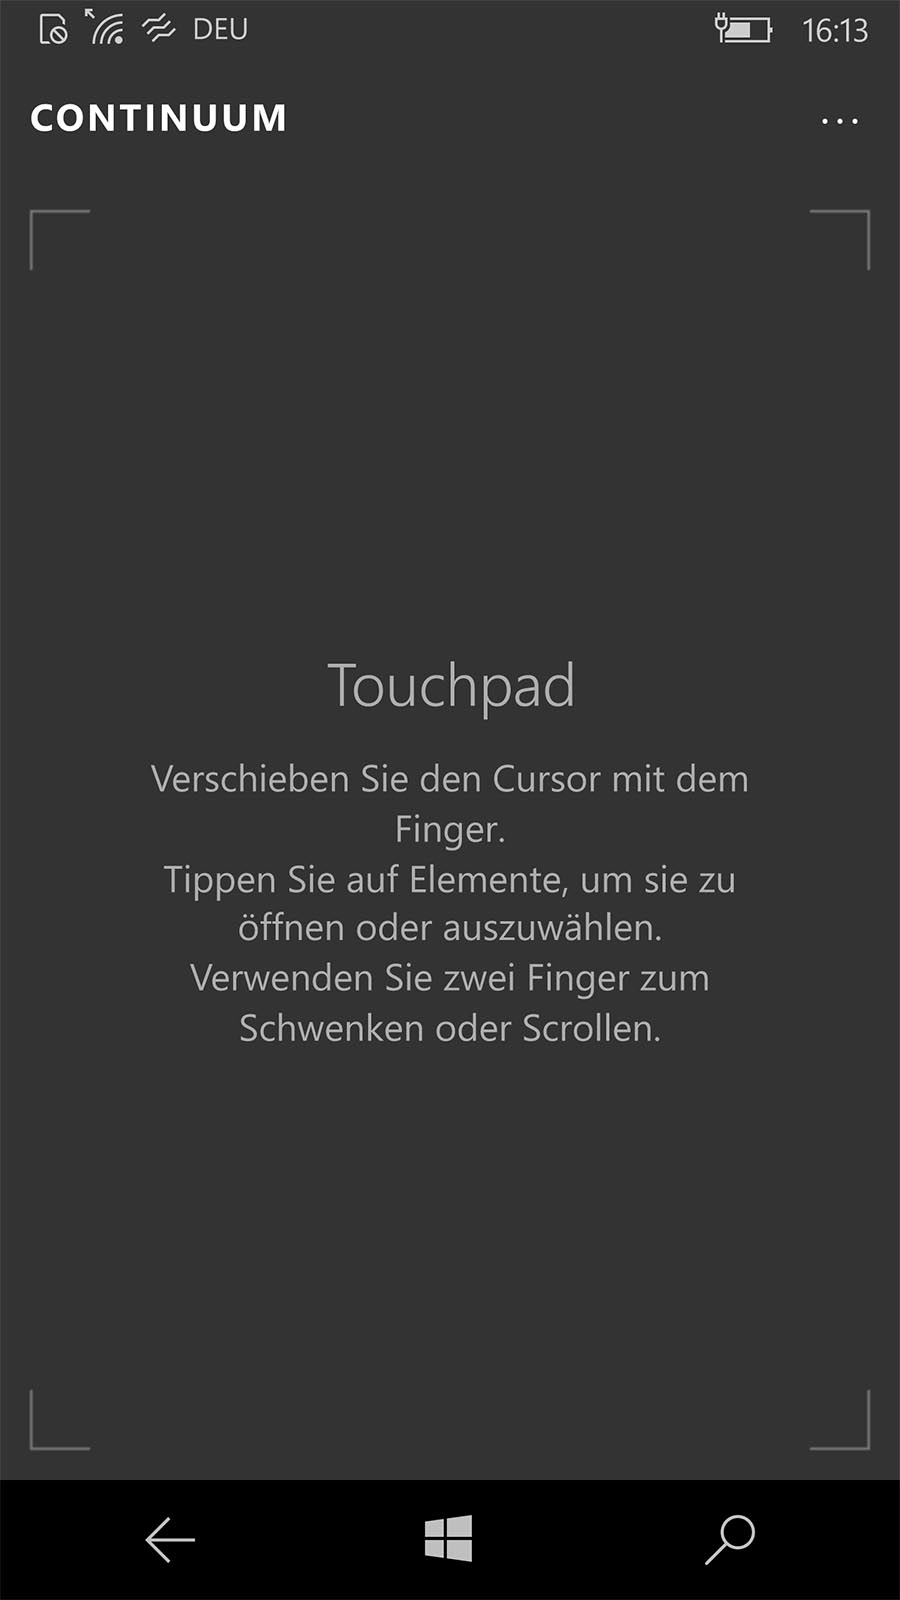 Microsoft Lumia 950 - Continuum Touchpad